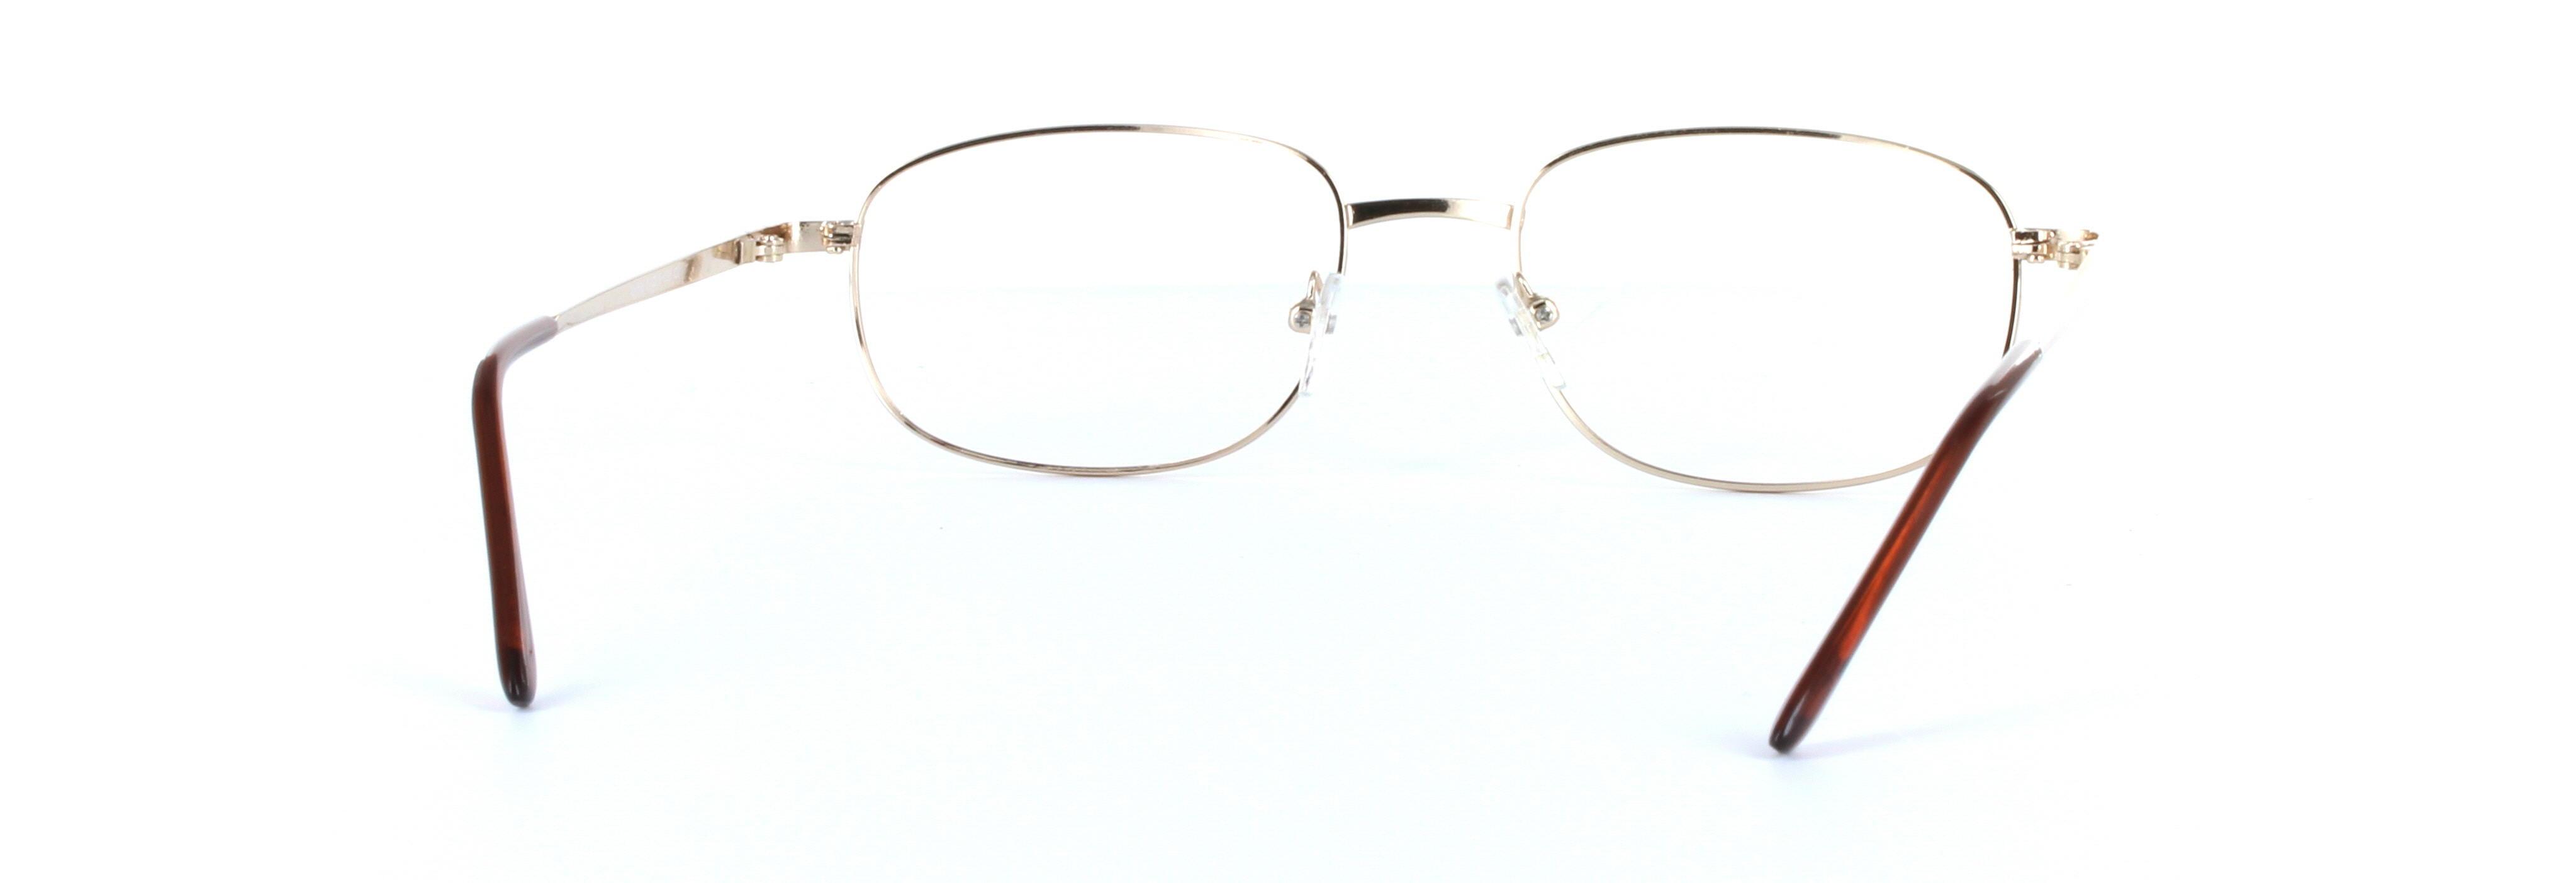 Ashton Gold Full Rim Rectangular Metal Glasses - Image View 3